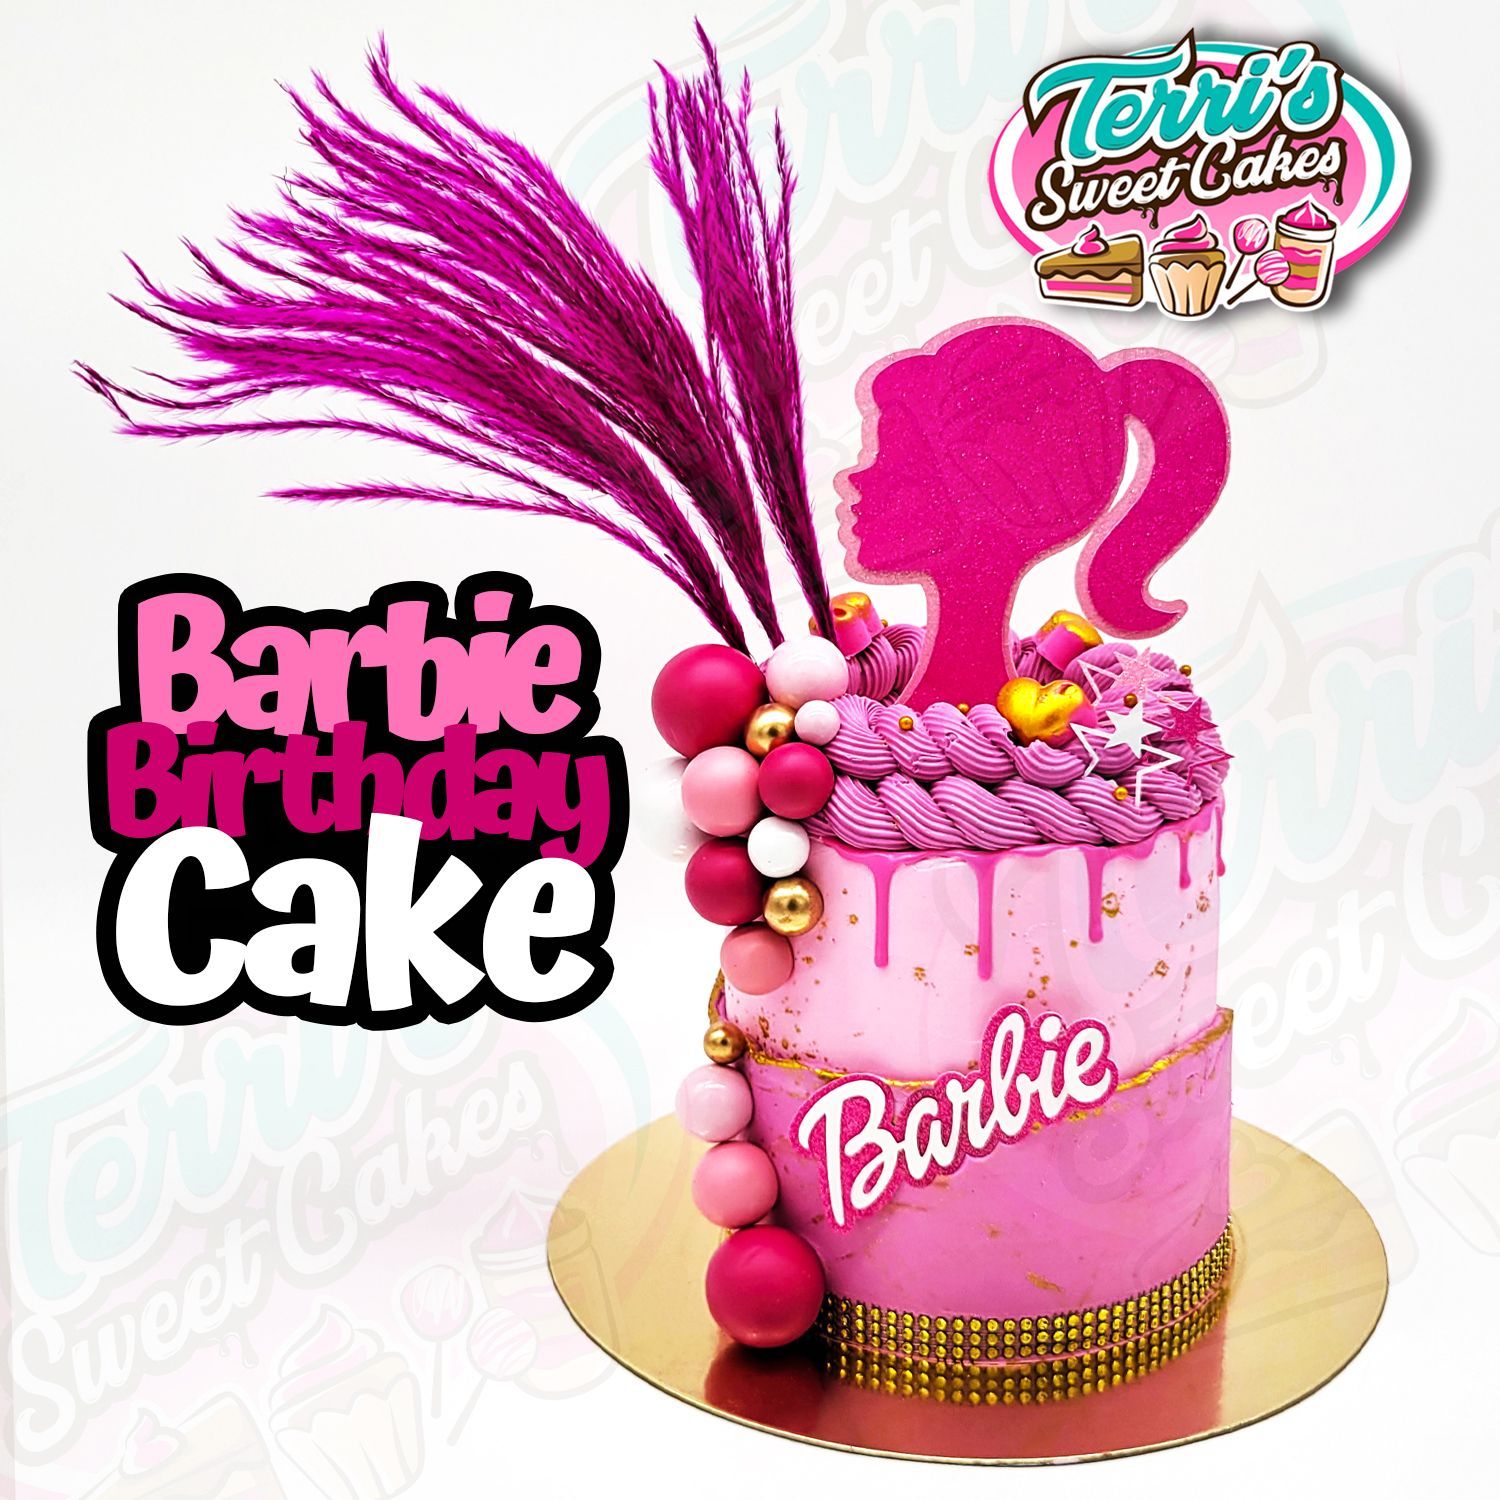 Barbie Movie Birthday Cake by Terri's Sweet Cakes!